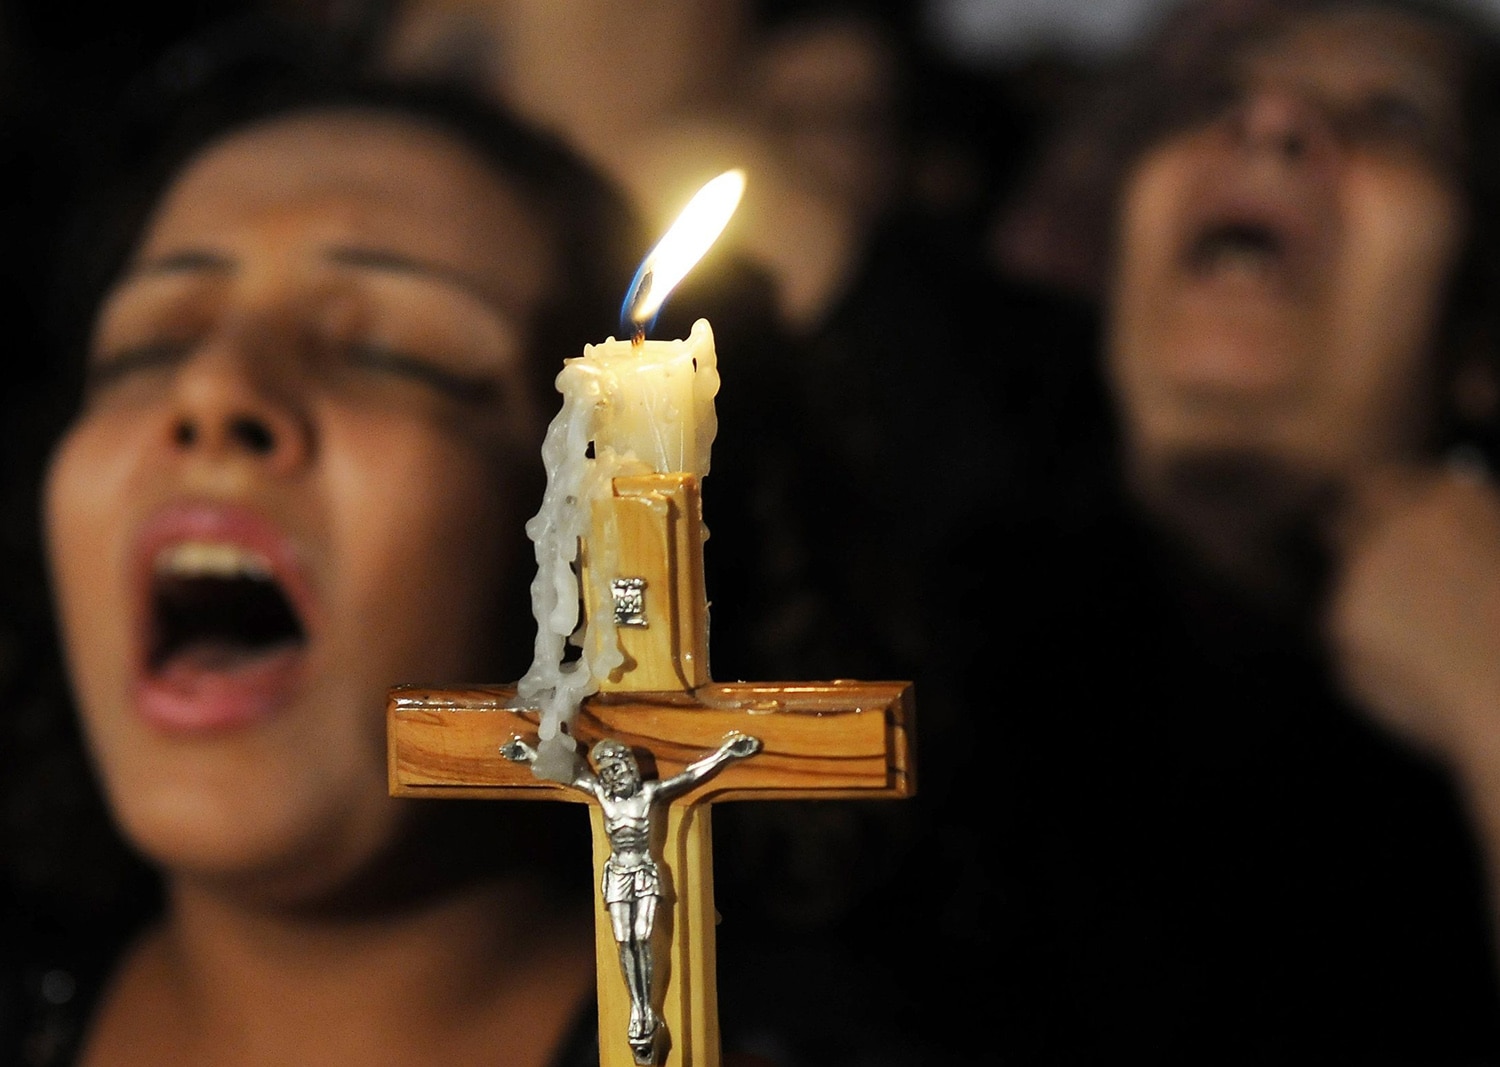 COPTIC CHRISTIANS PRAY INSIDE CHURCH IN CAIRO